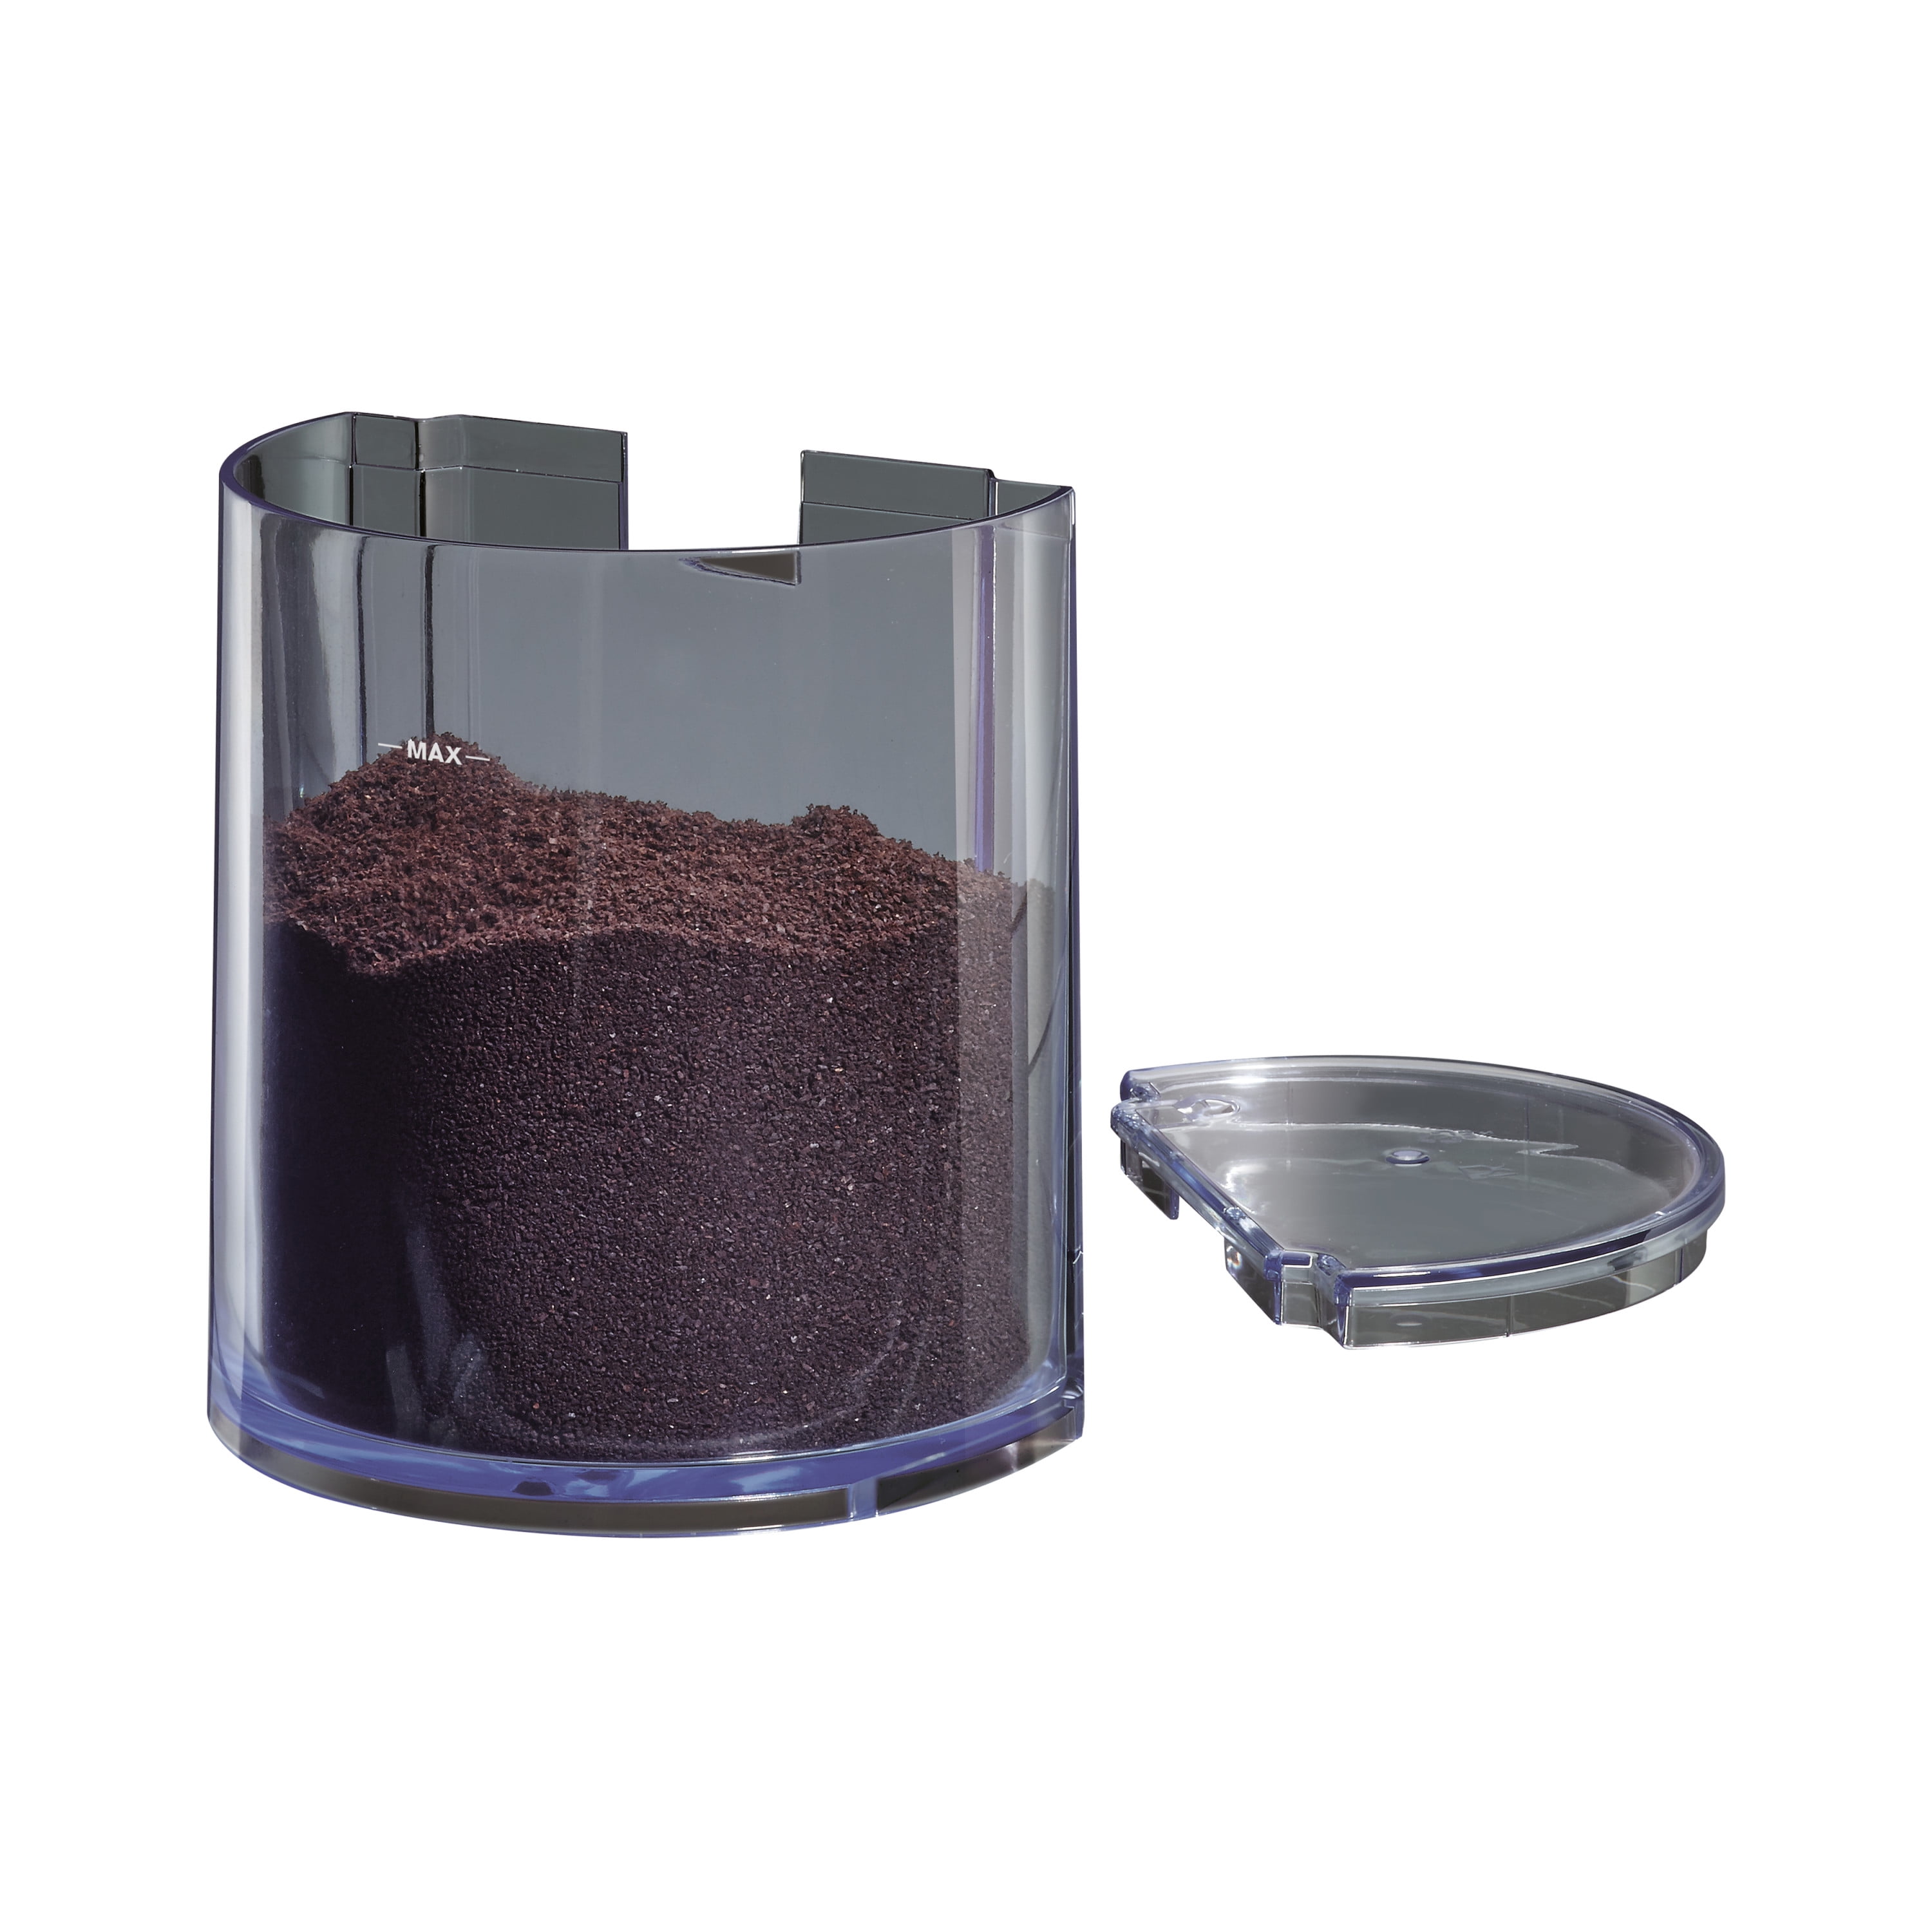 KRUPS GX500 Coffee Grinder Black Precision Flat Burr 12 Cup 12 Grind  Working 689745333590